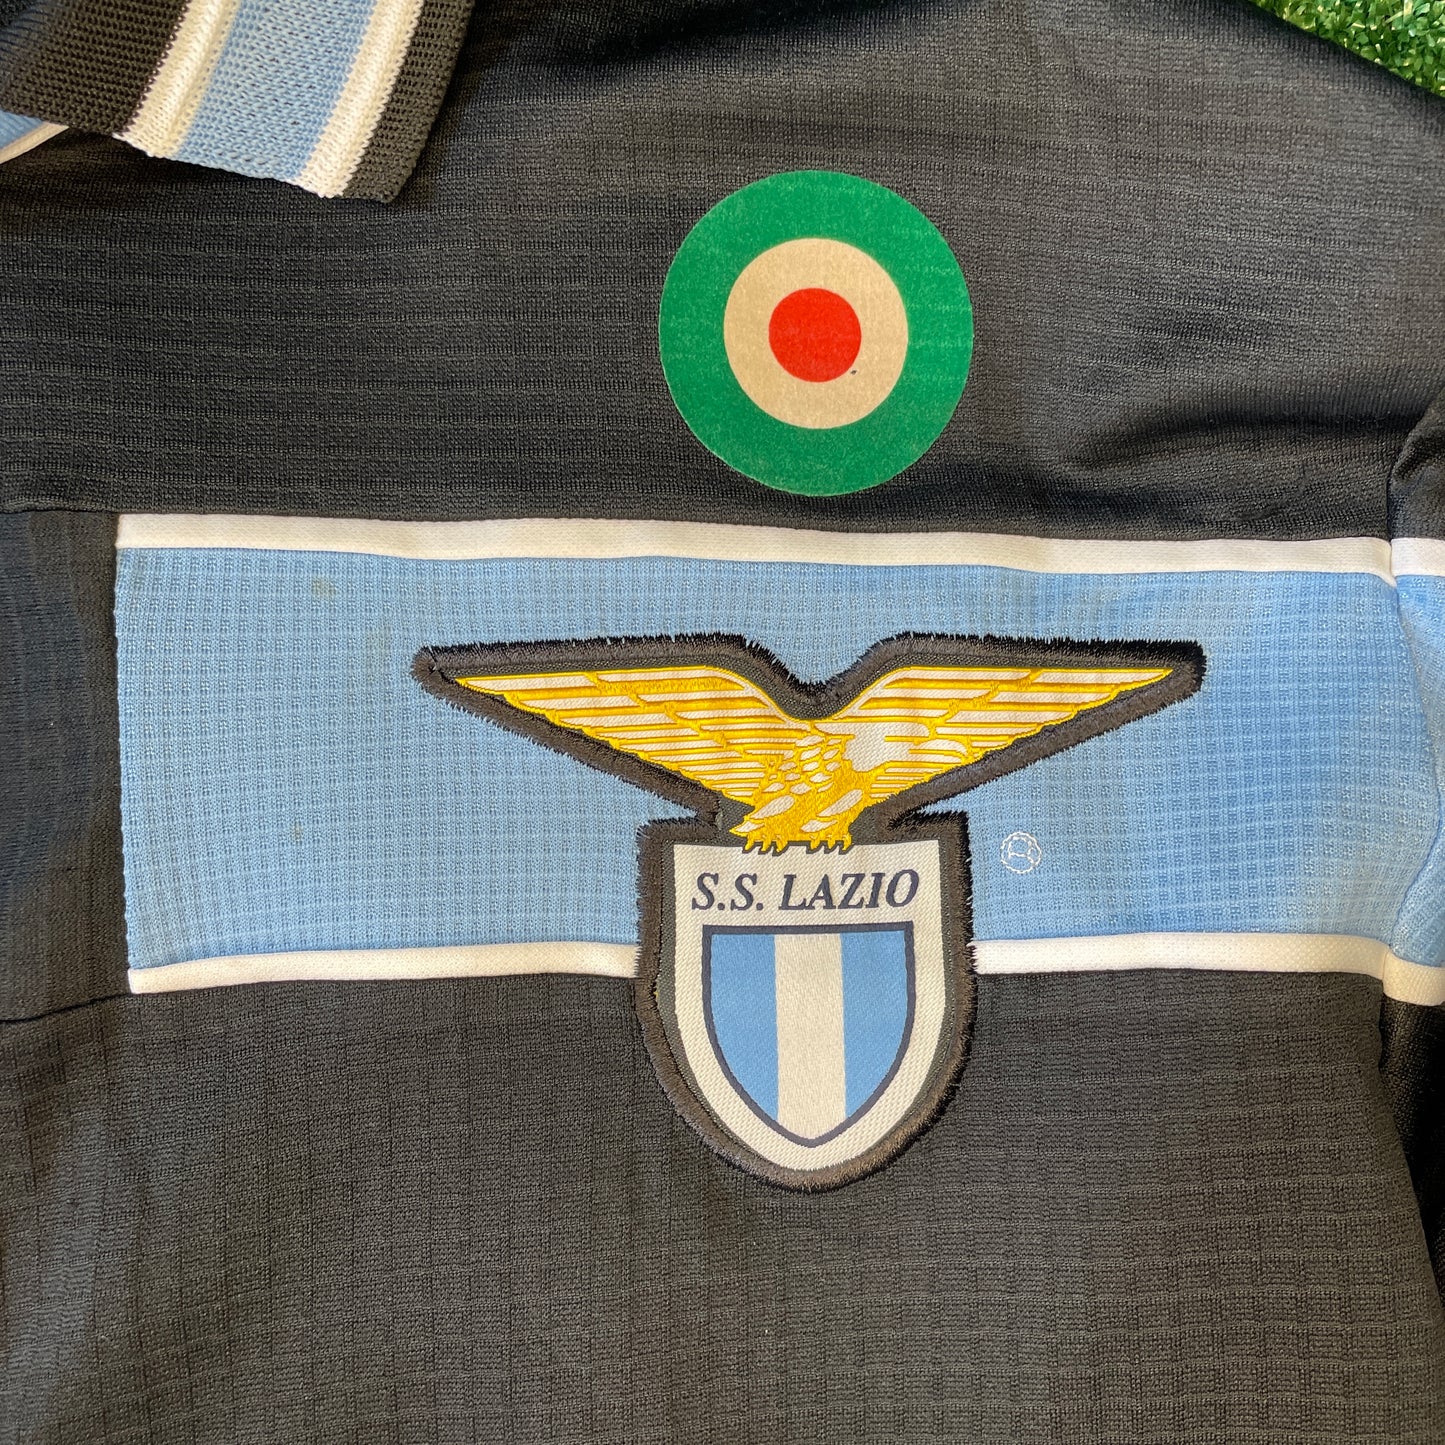 Lazio 1999 Third shirt badge